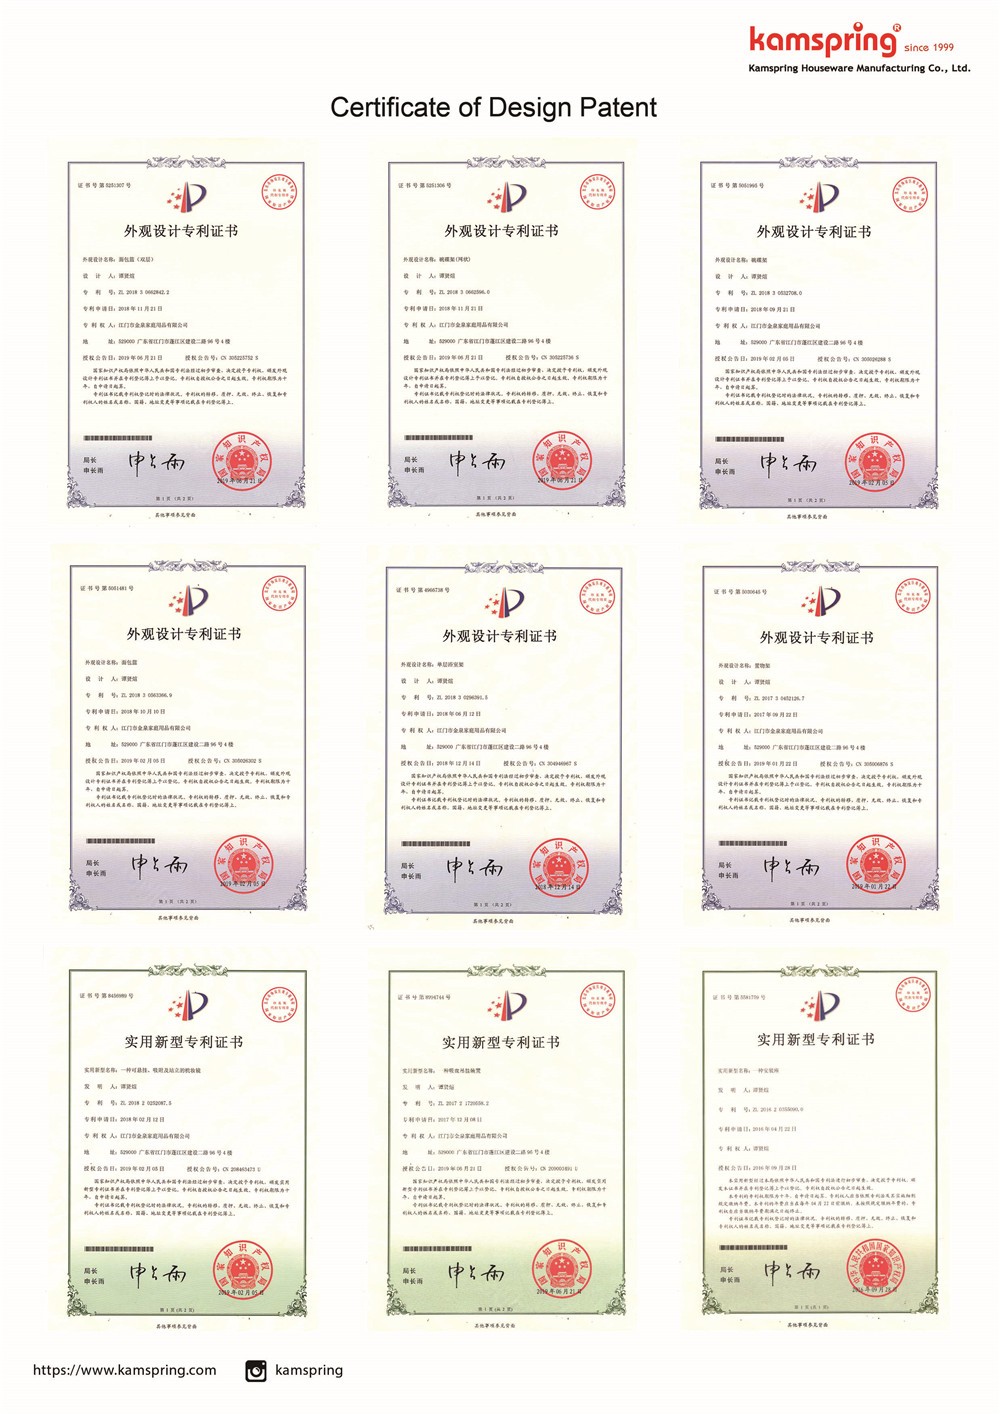 Certificate of Design Patent 小图.jpg